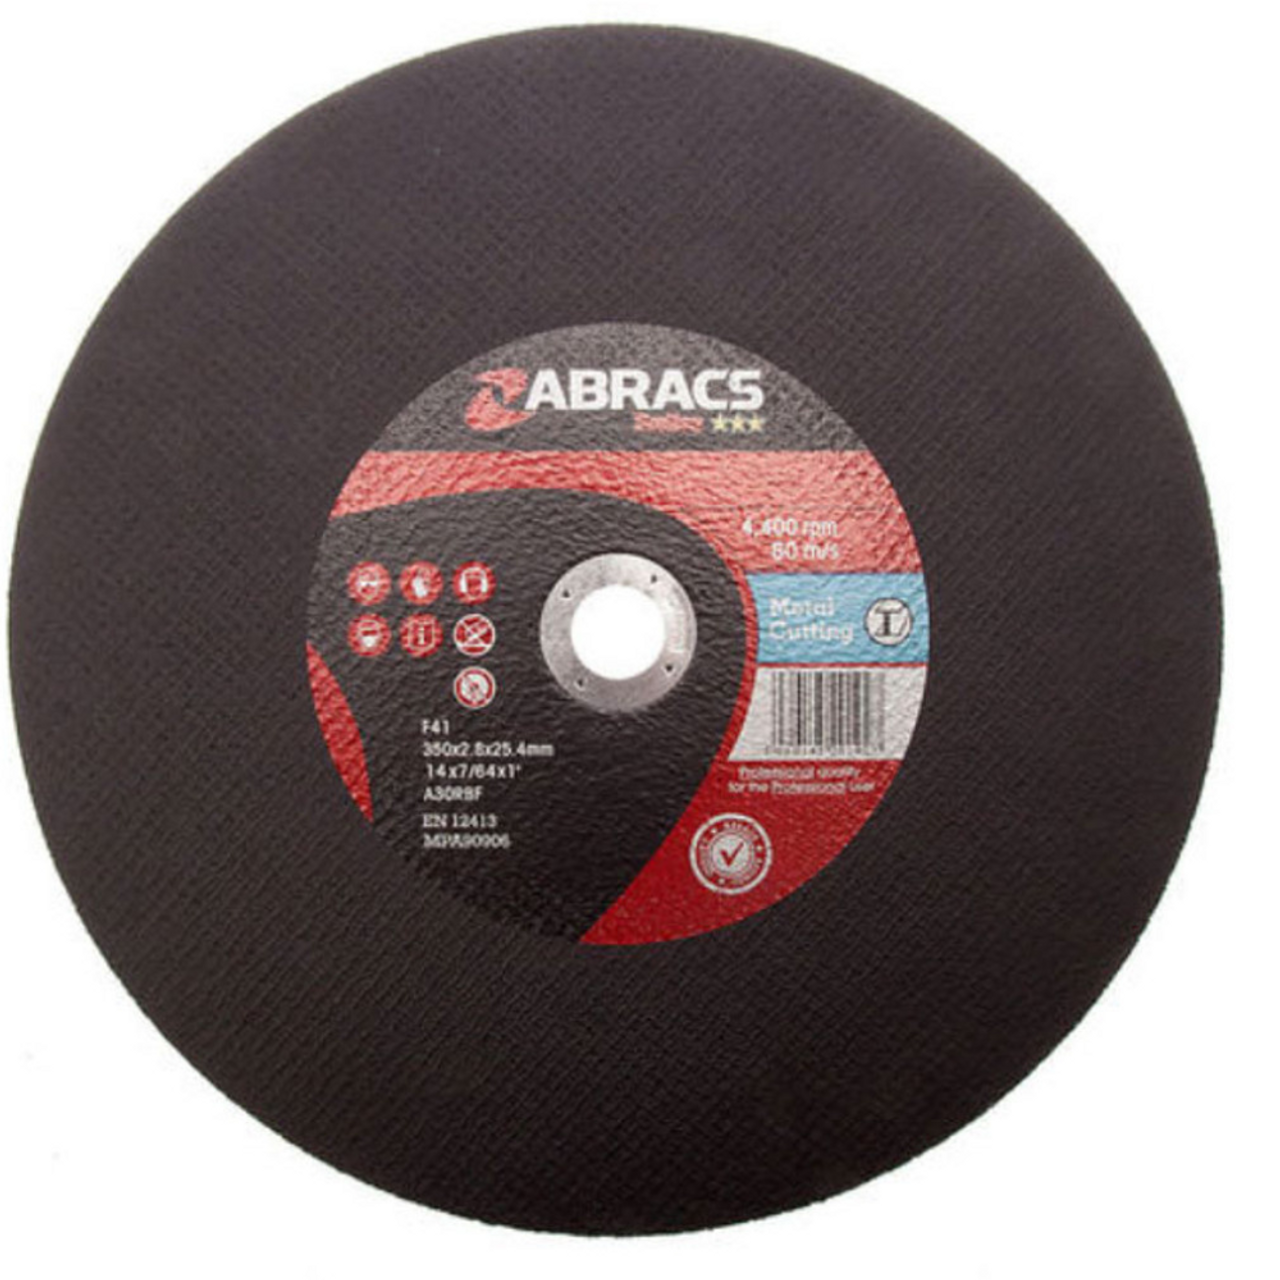 Abracs 350mm Cutting Discs